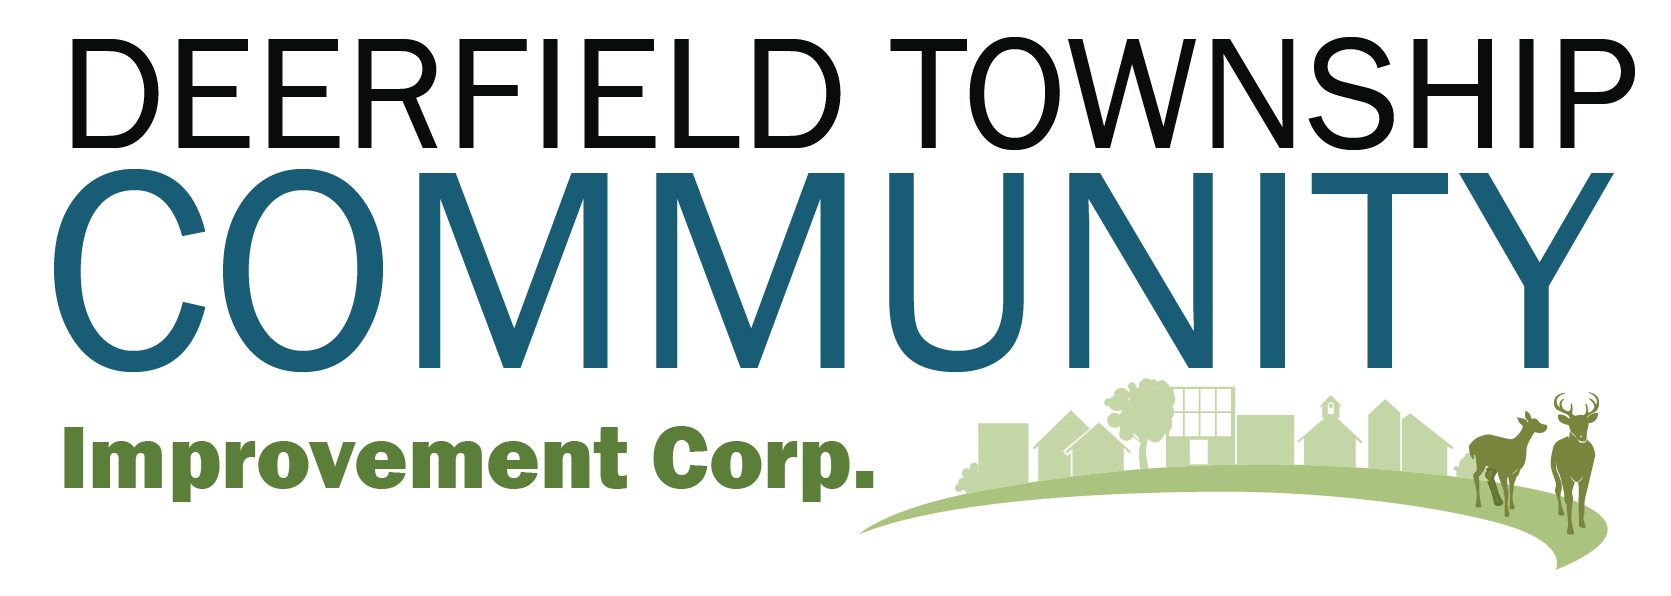 Deerfield Township Community Improvement Corporation